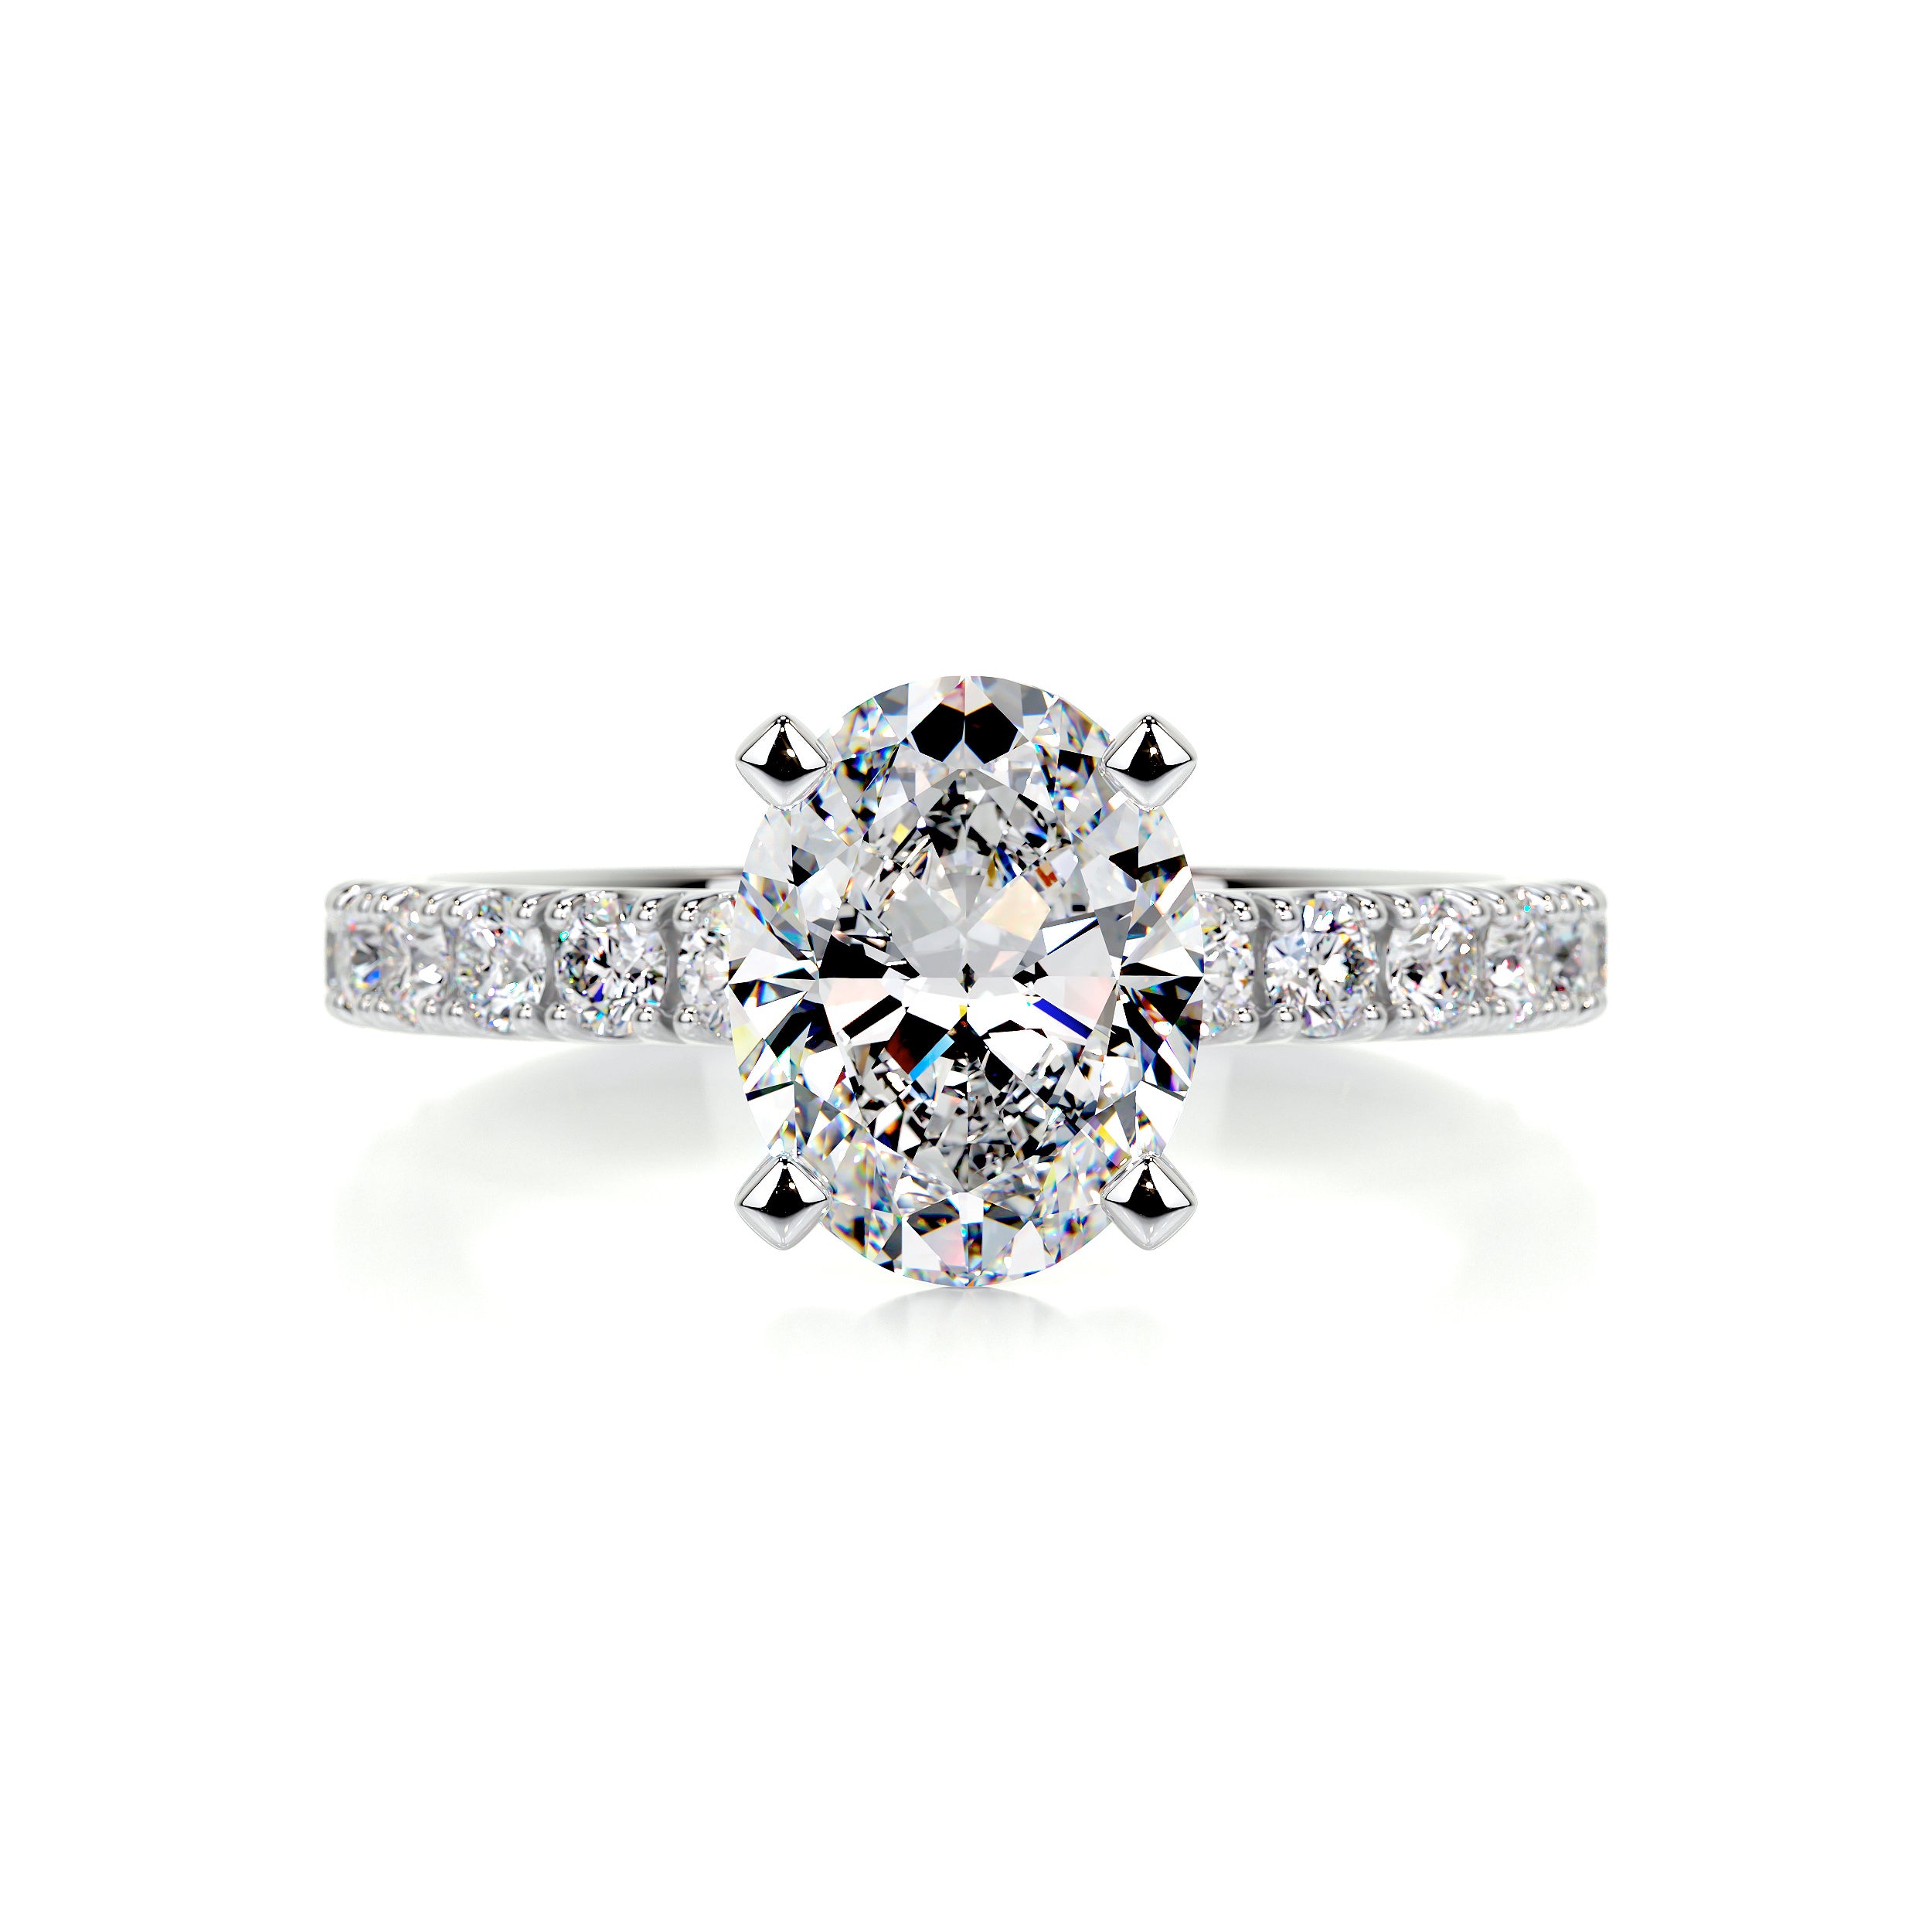 Alison Moissanite & Diamonds Ring   (2.65 Carat) -18K White Gold